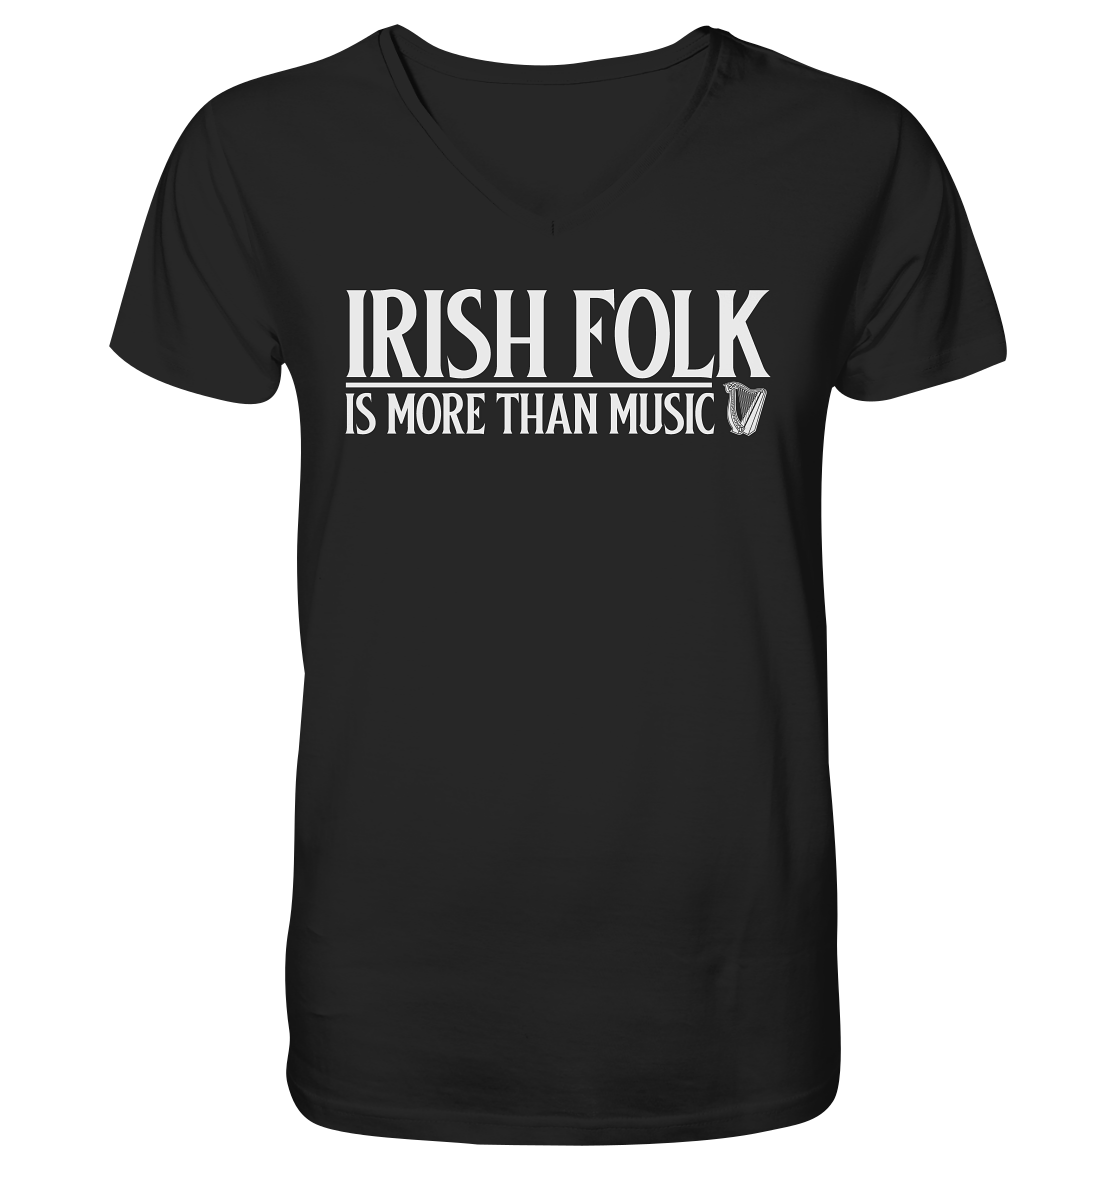 Irish Folk "Is More Than Music" - V-Neck Shirt